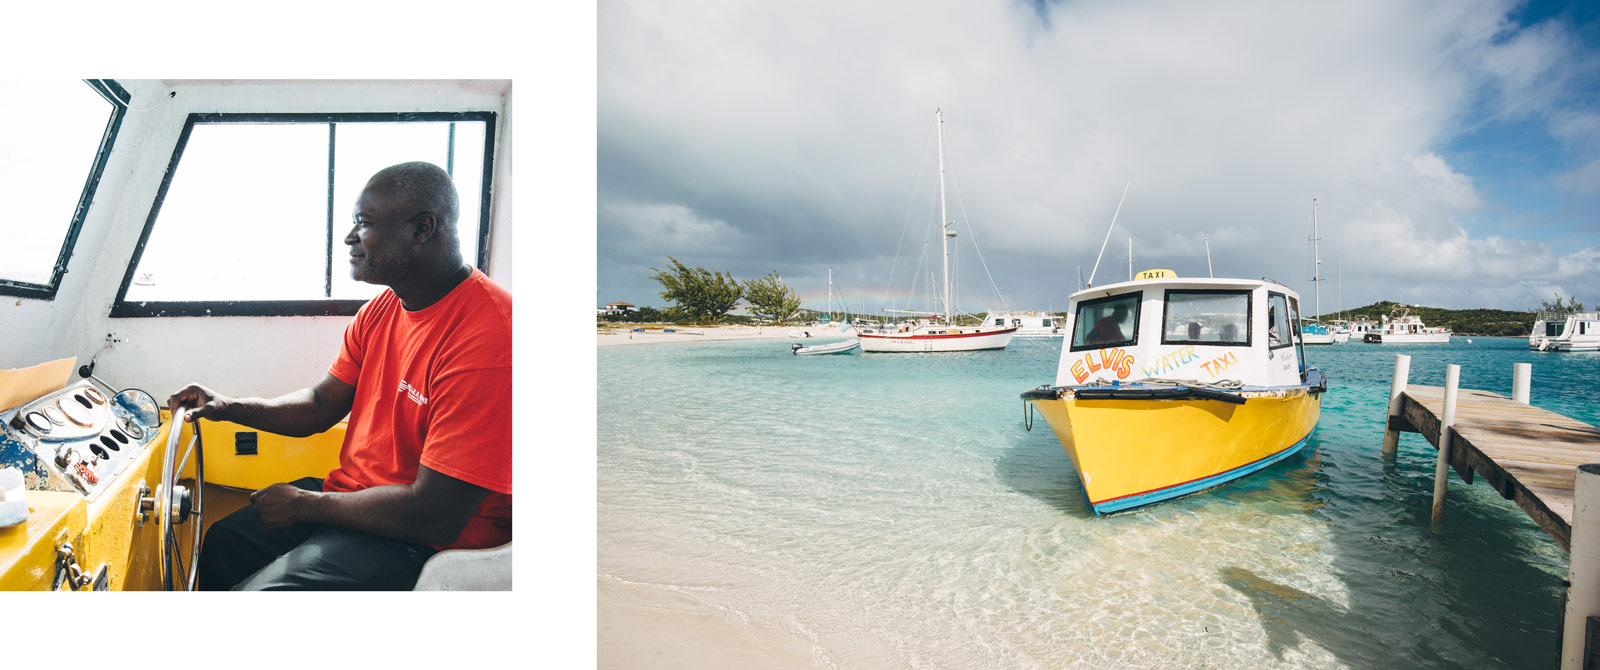 Elvis water taxi, Exumas, Bahamas